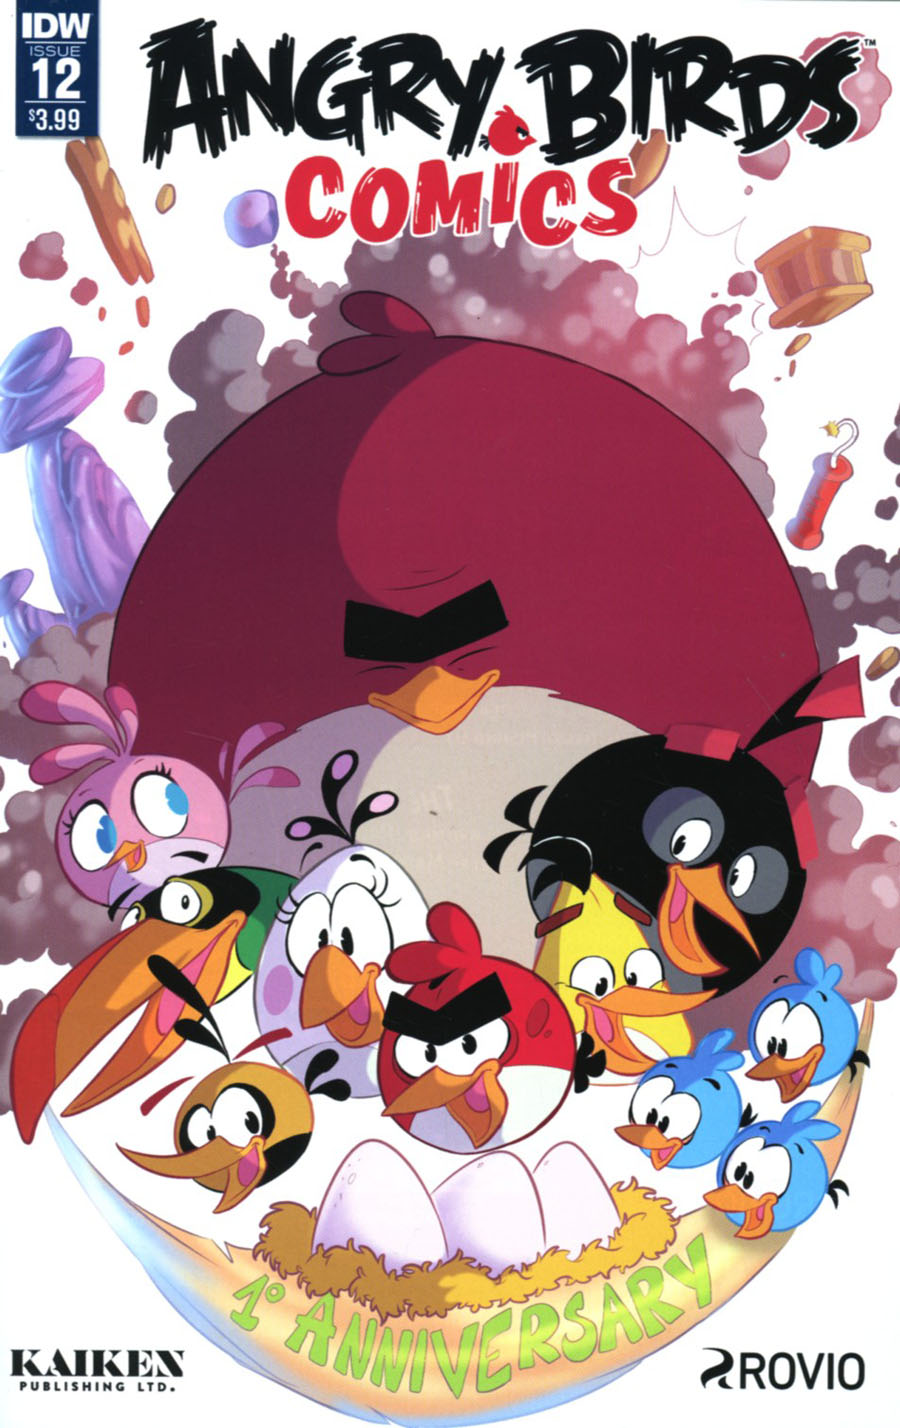 Angry Birds Comics Vol 2 #12 Cover A Regular Ciro Cangiolosi Cover